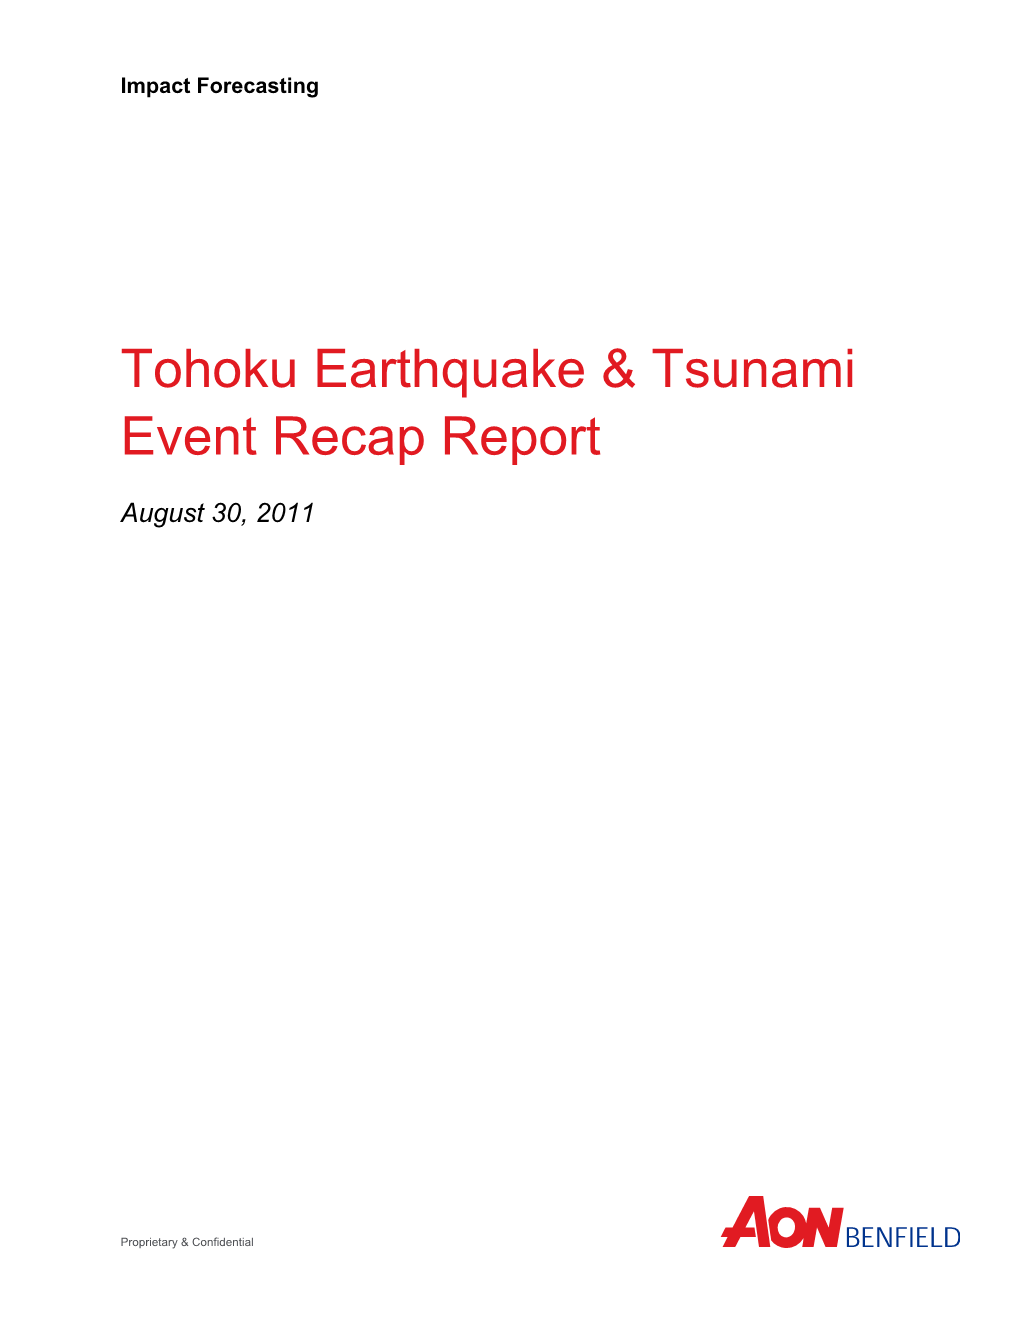 Tohoku Earthquake & Tsunami Event Recap Report